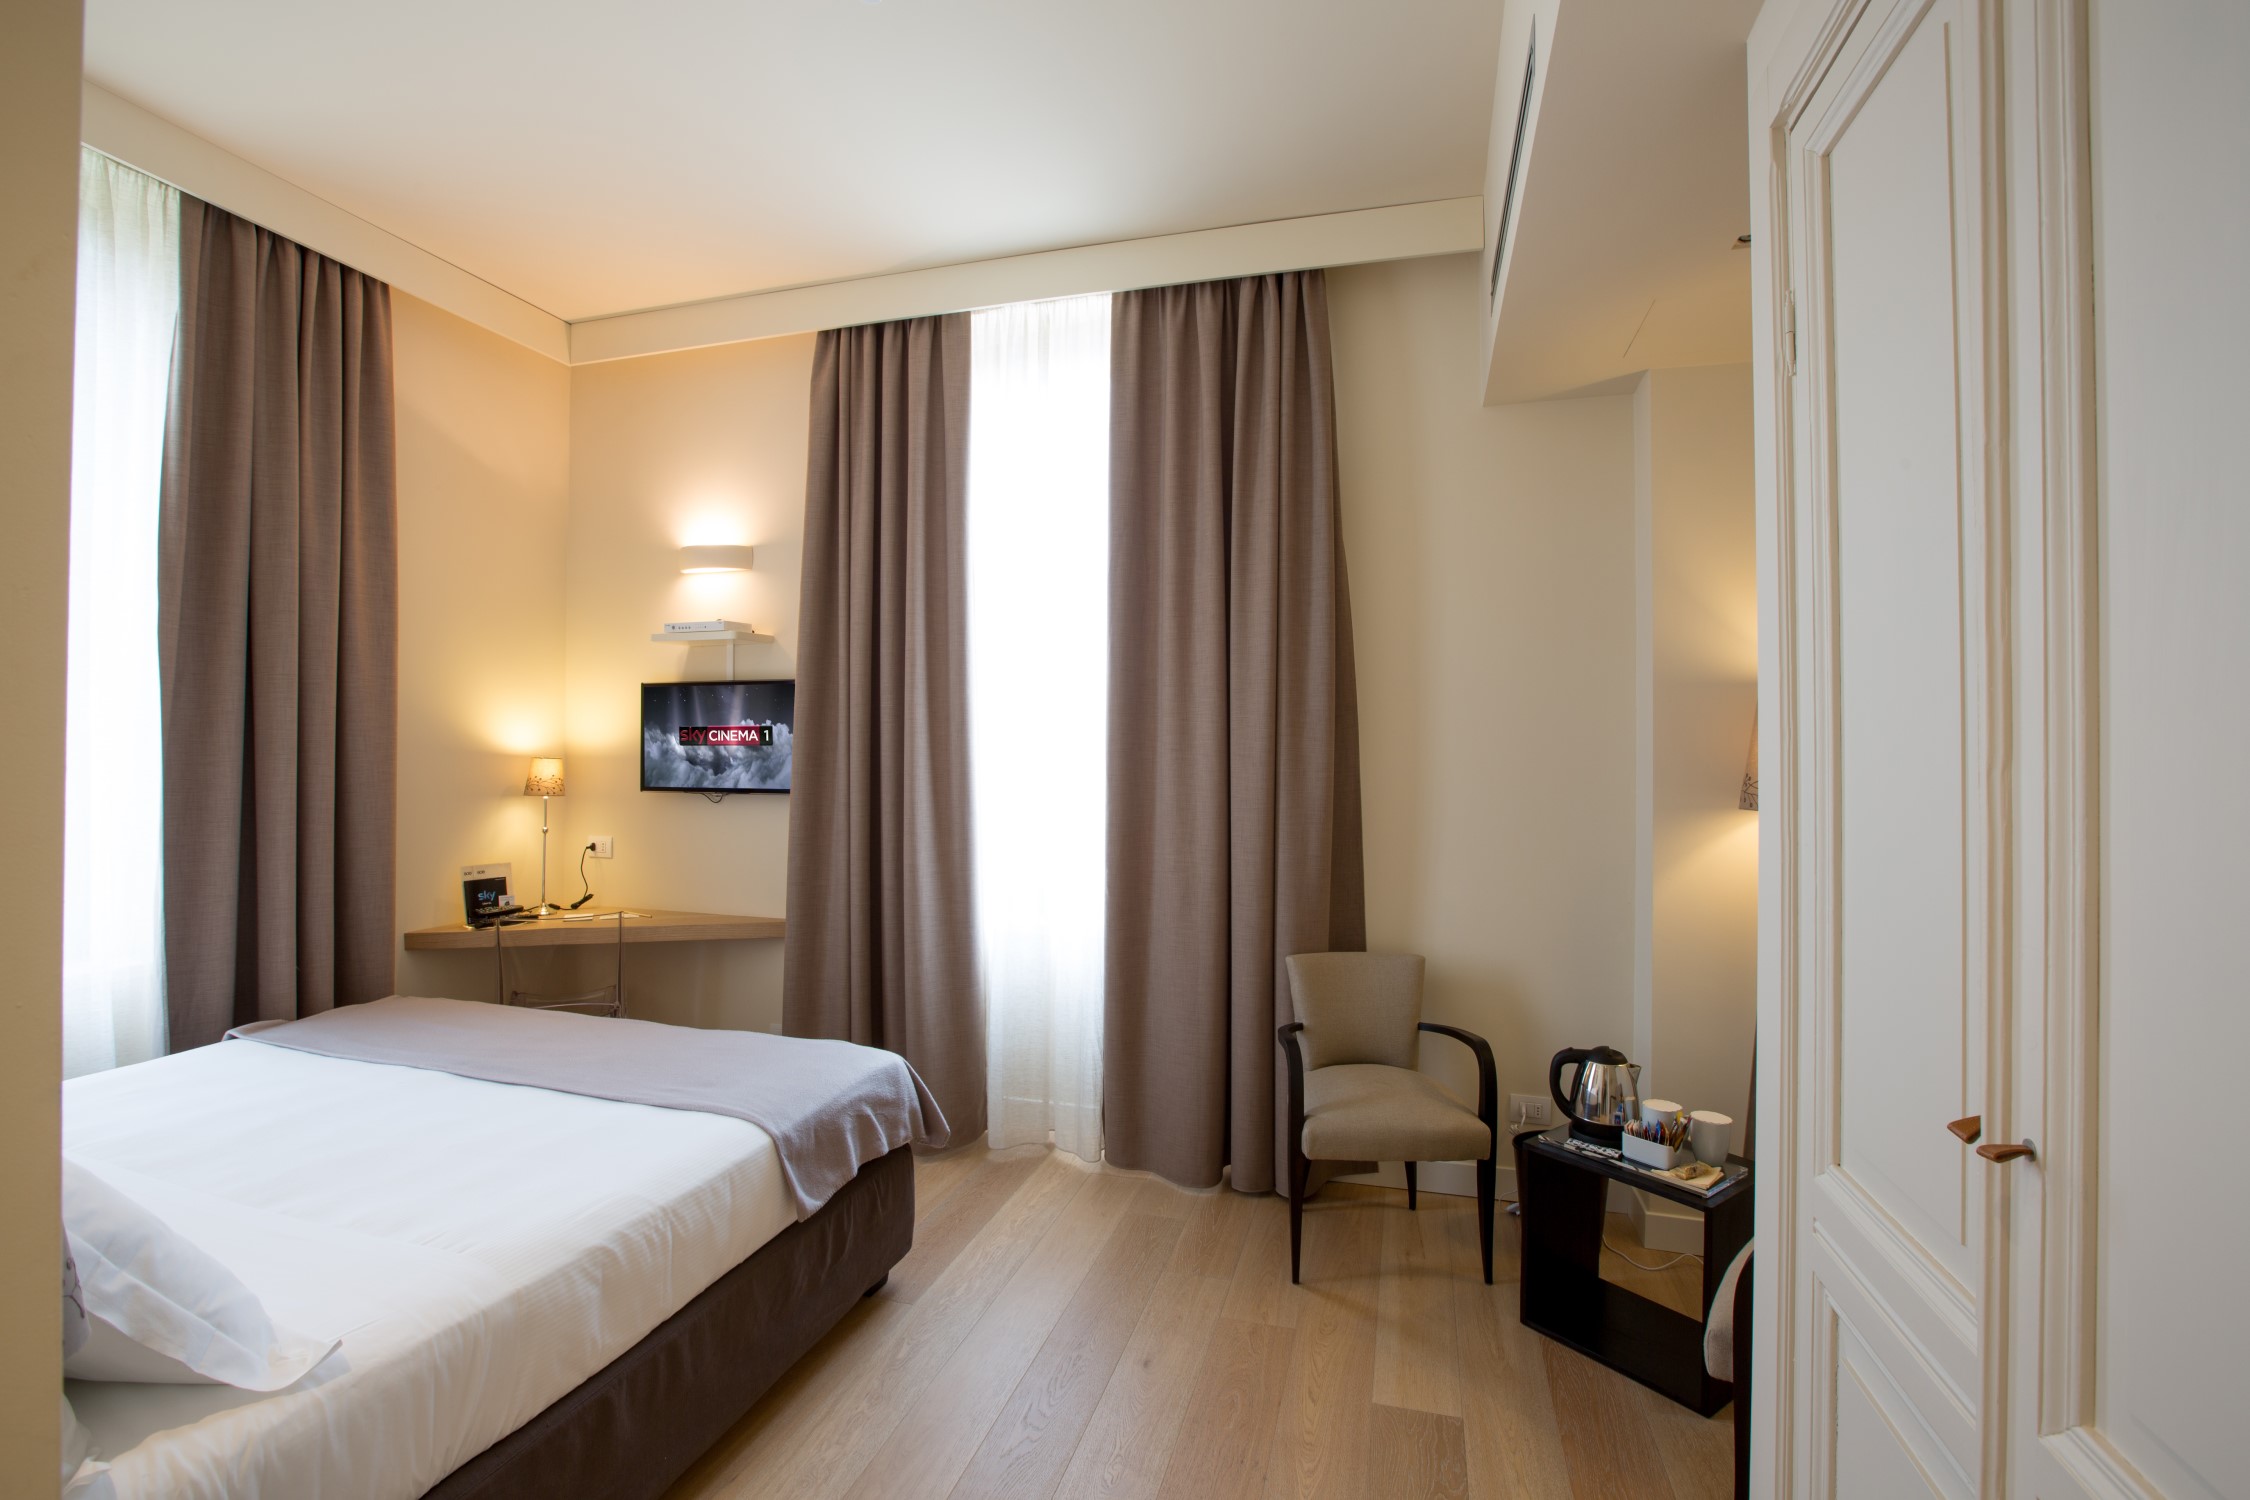 Camera Deluxe Room Hotel 900 Giulianova Luxury Business Leisure Vacanza